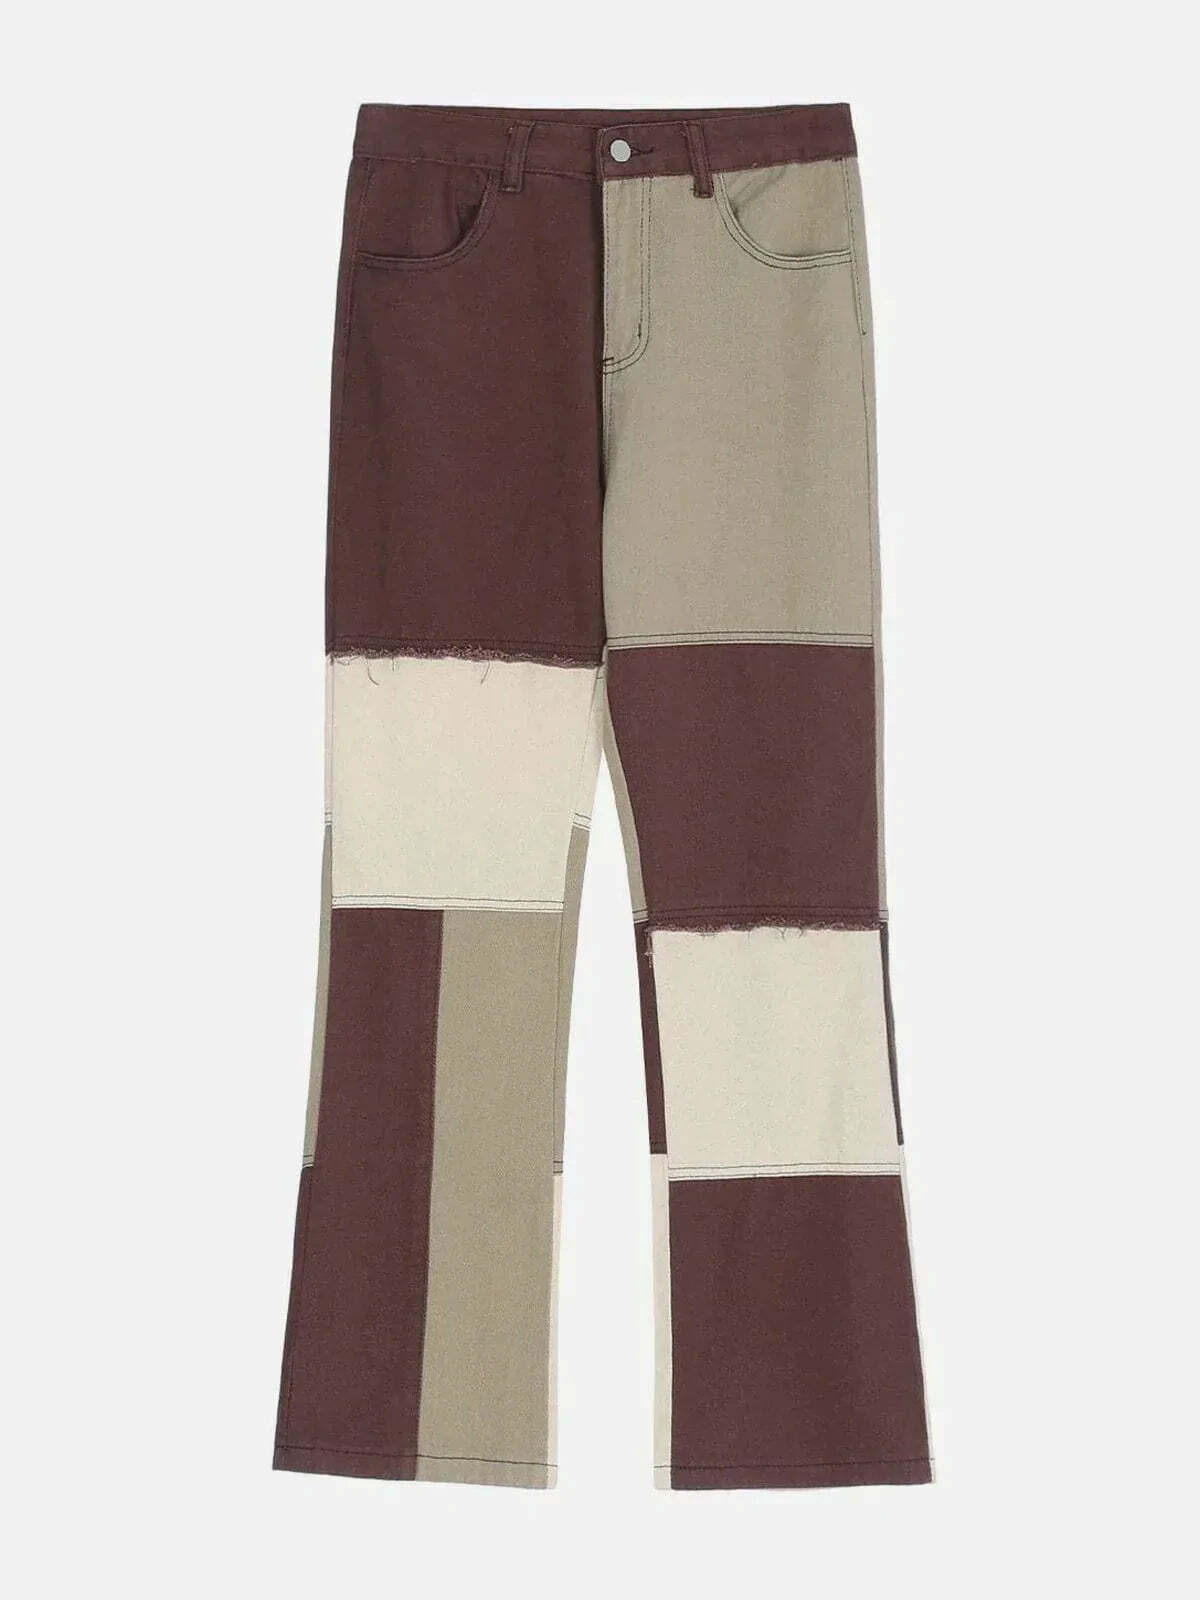 colorblock plaid jeans edgy & vibrant streetwear 4037